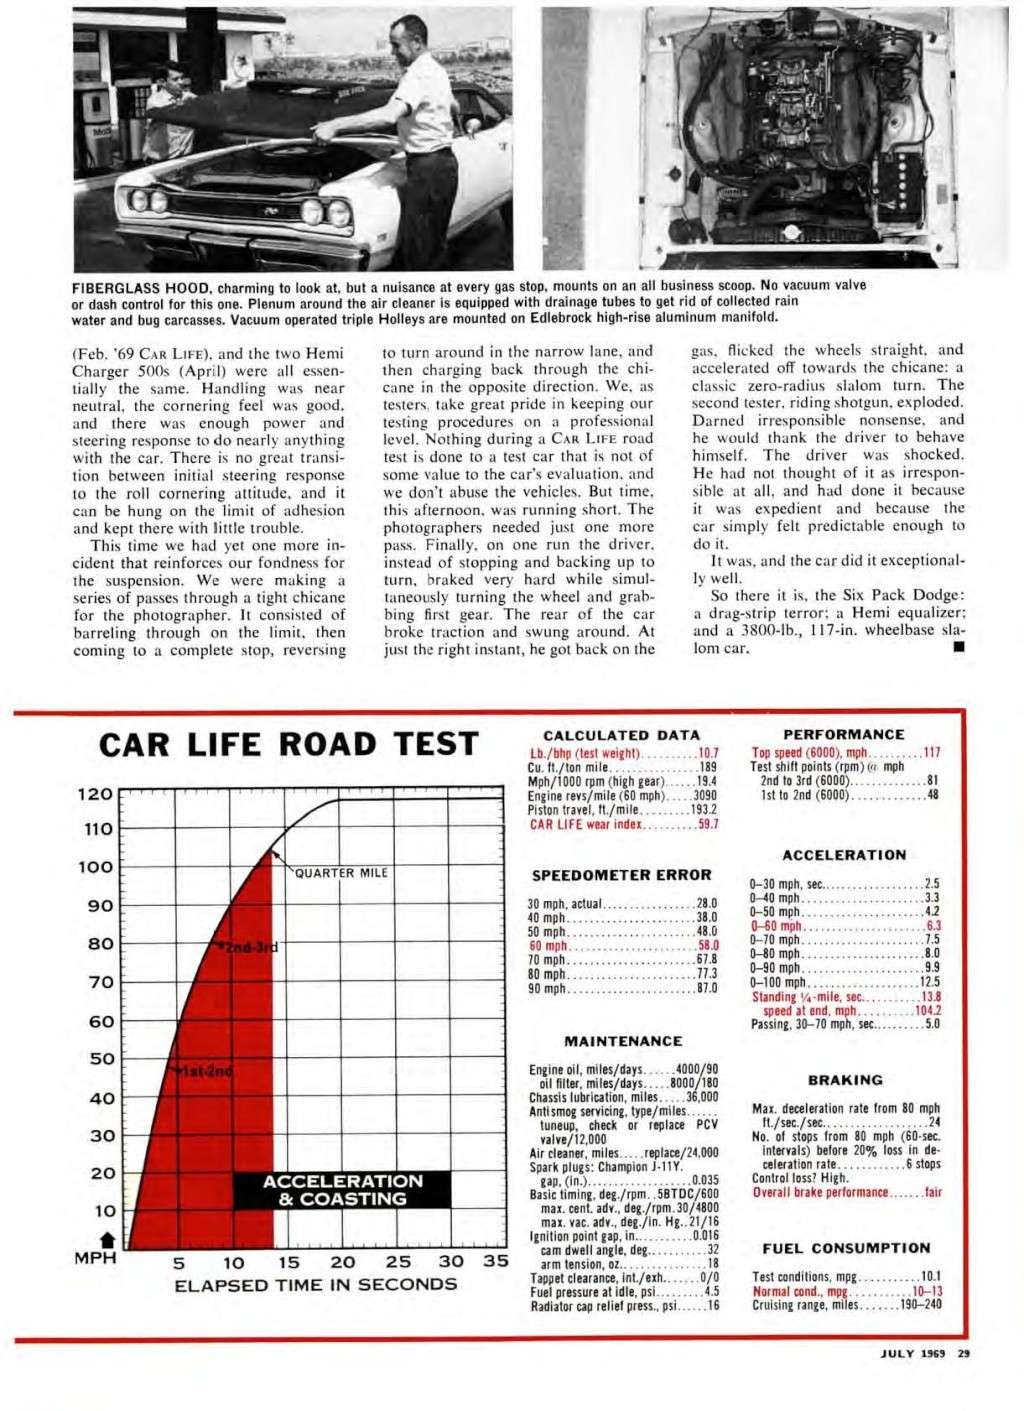 1969 Dodge Super Bee 440 Six Pack Road Test 1969-012